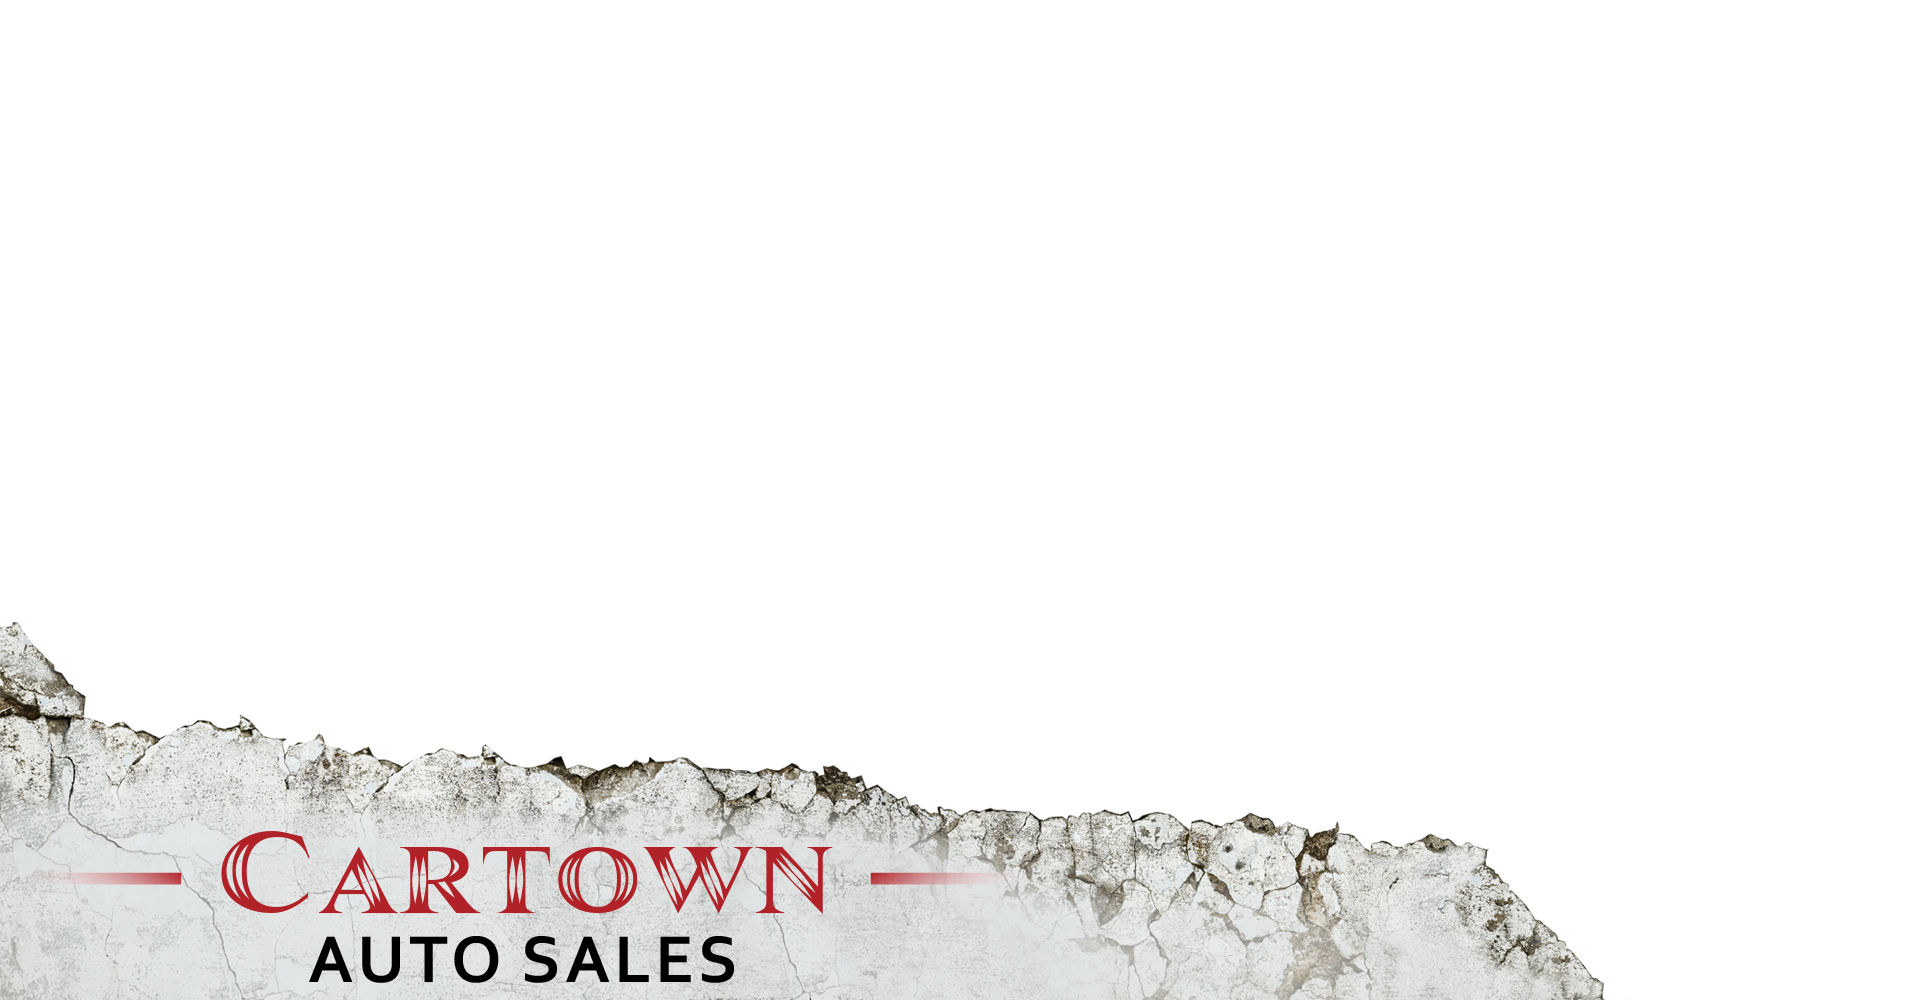 Cartown Auto Sales